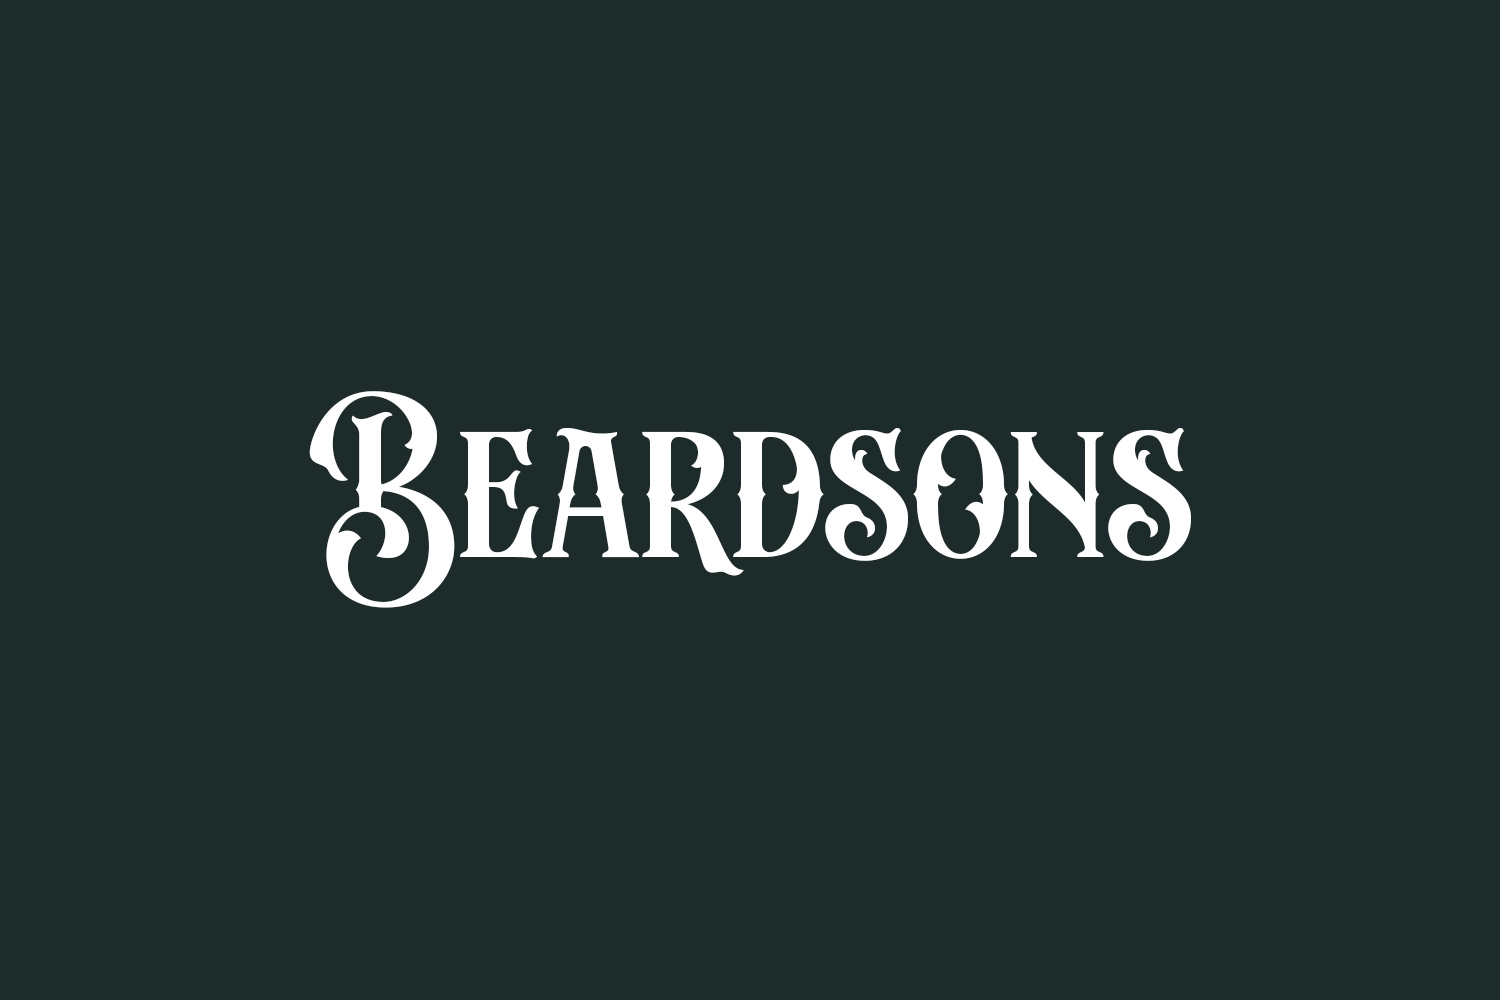 Beardsons Free Font